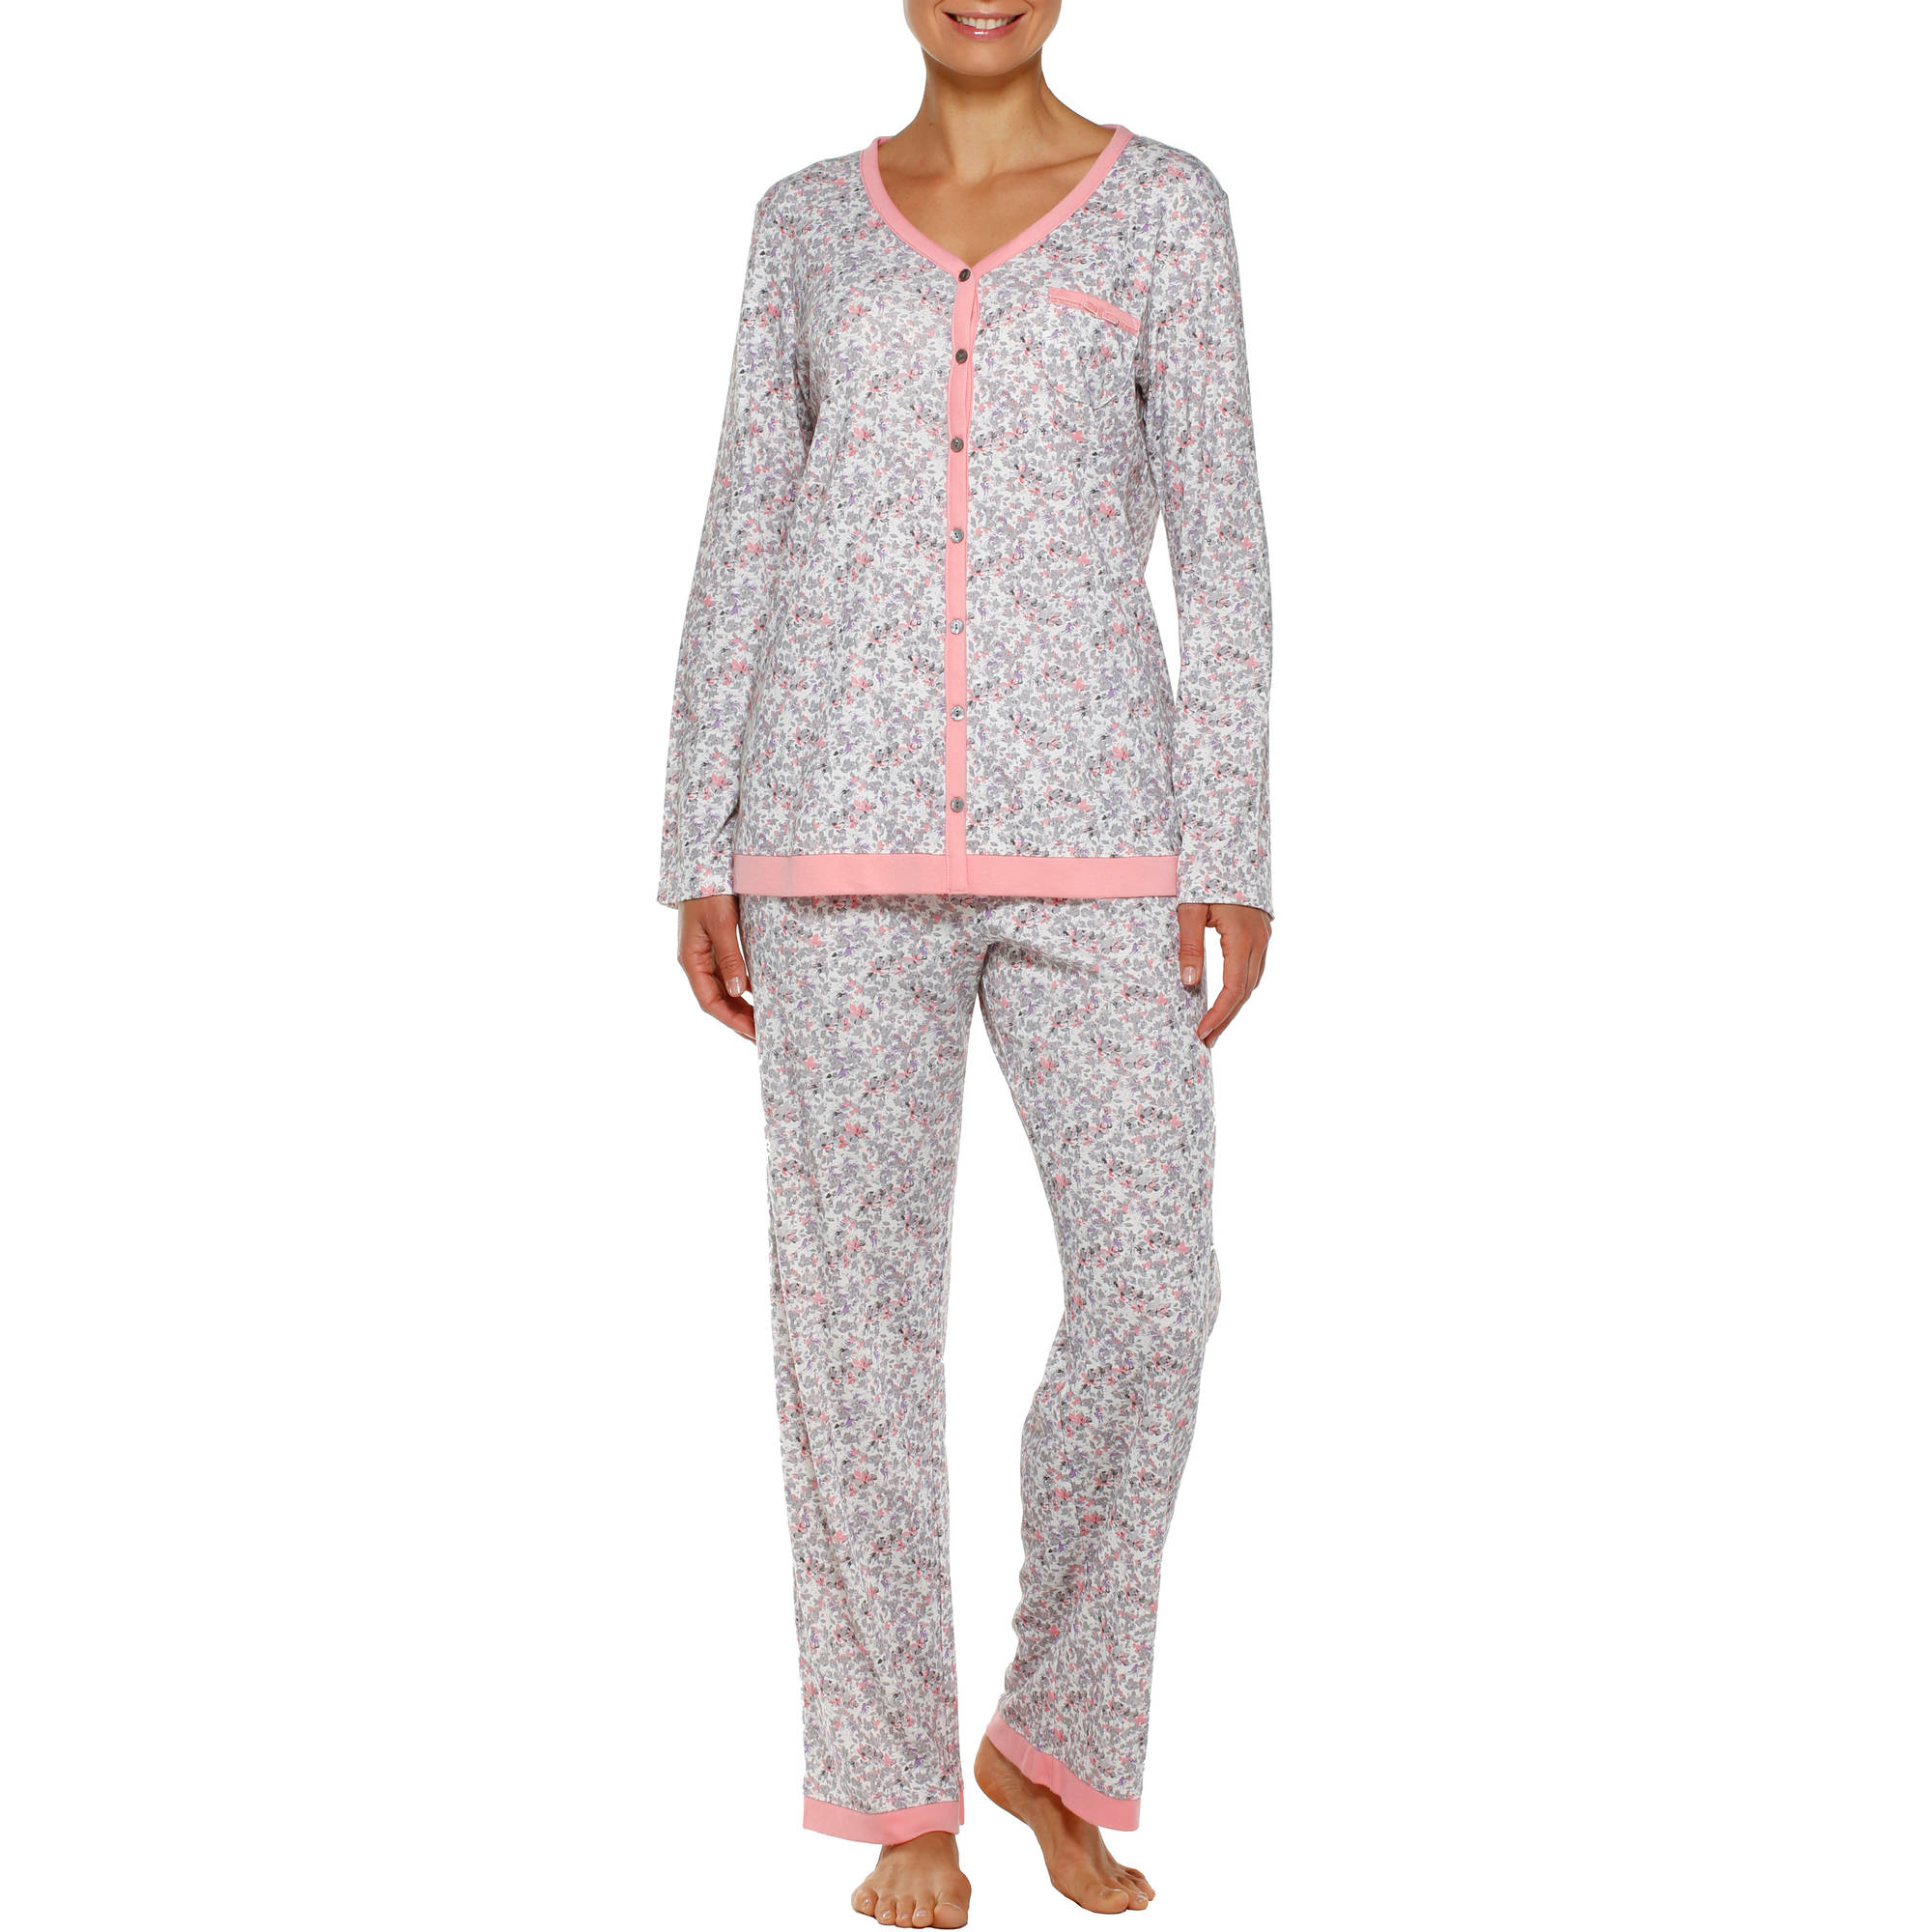  Women's V-Neck Knit Pajama 2 Piece Sleepwear Set with Velvet Ribbon Trim